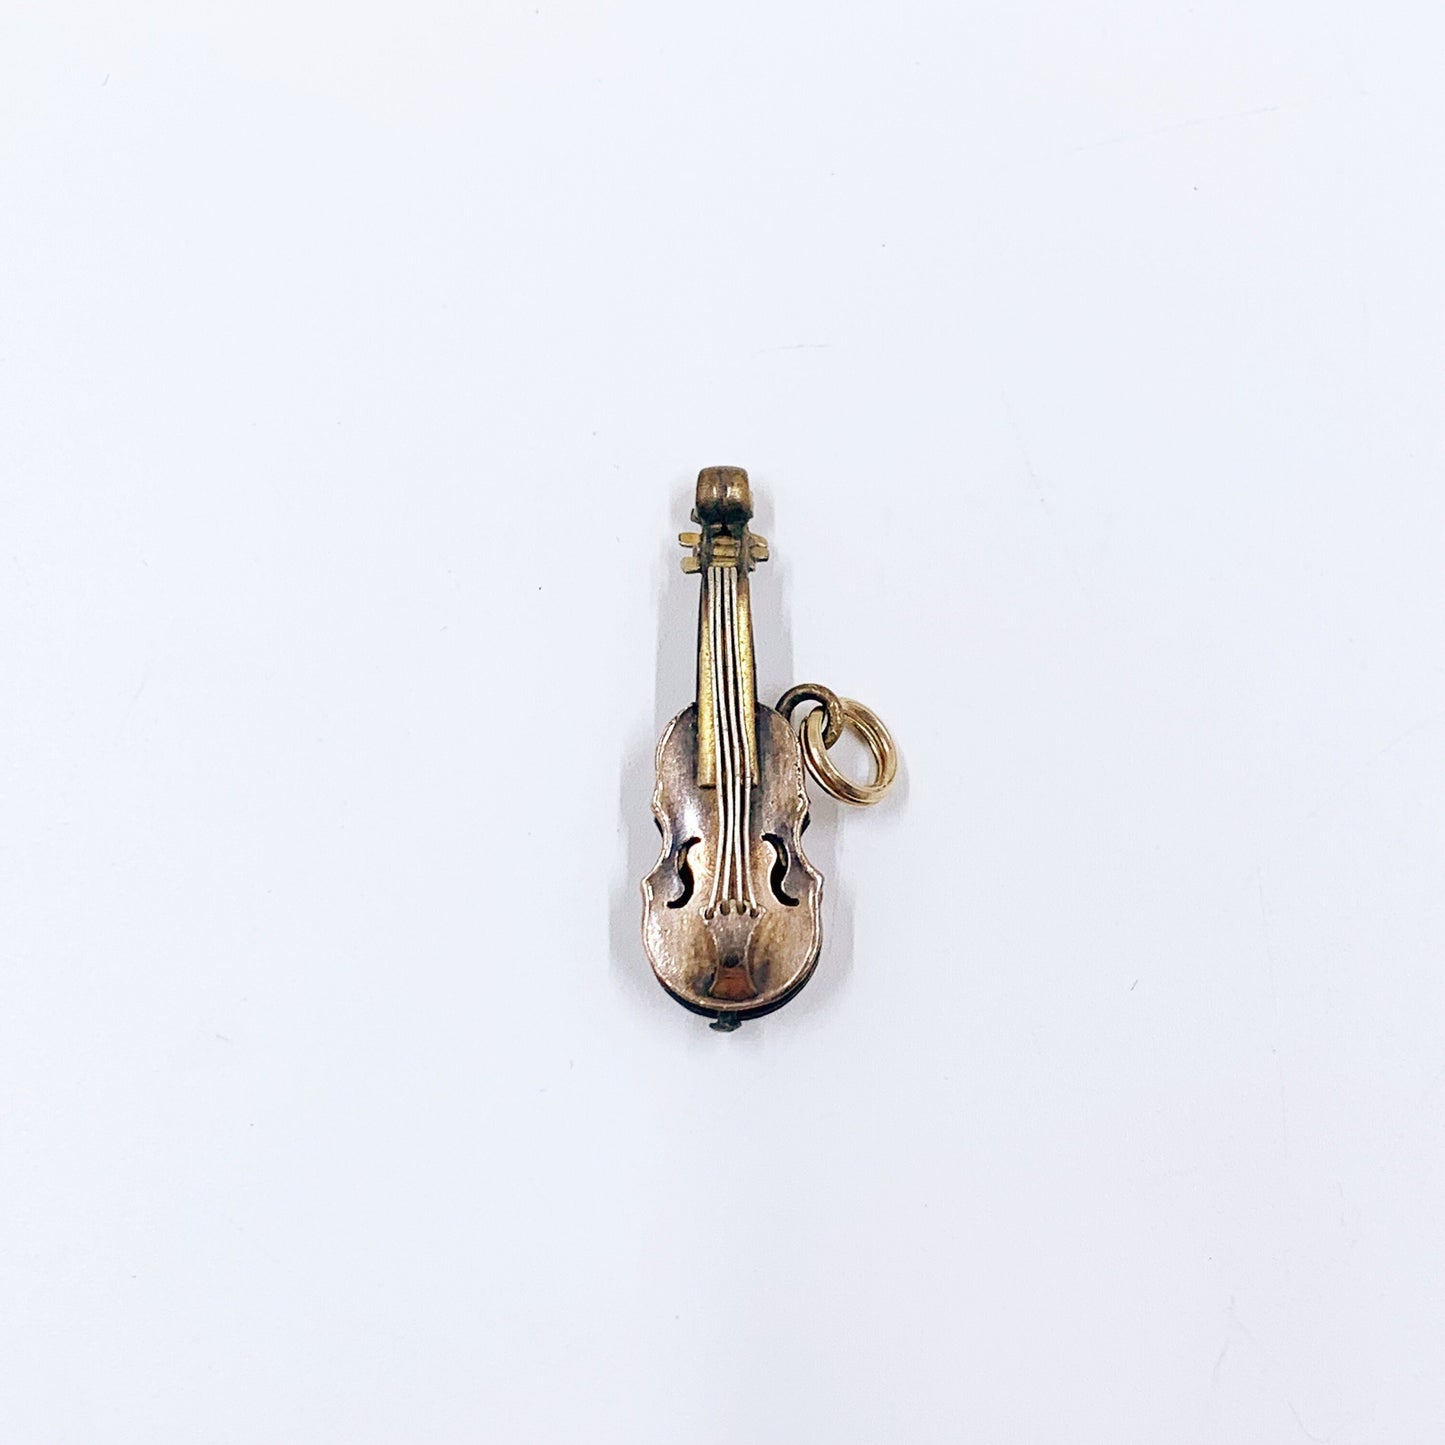 Vintage Gold Filled Cello Charm | Vintage Musical String Instrument Charm